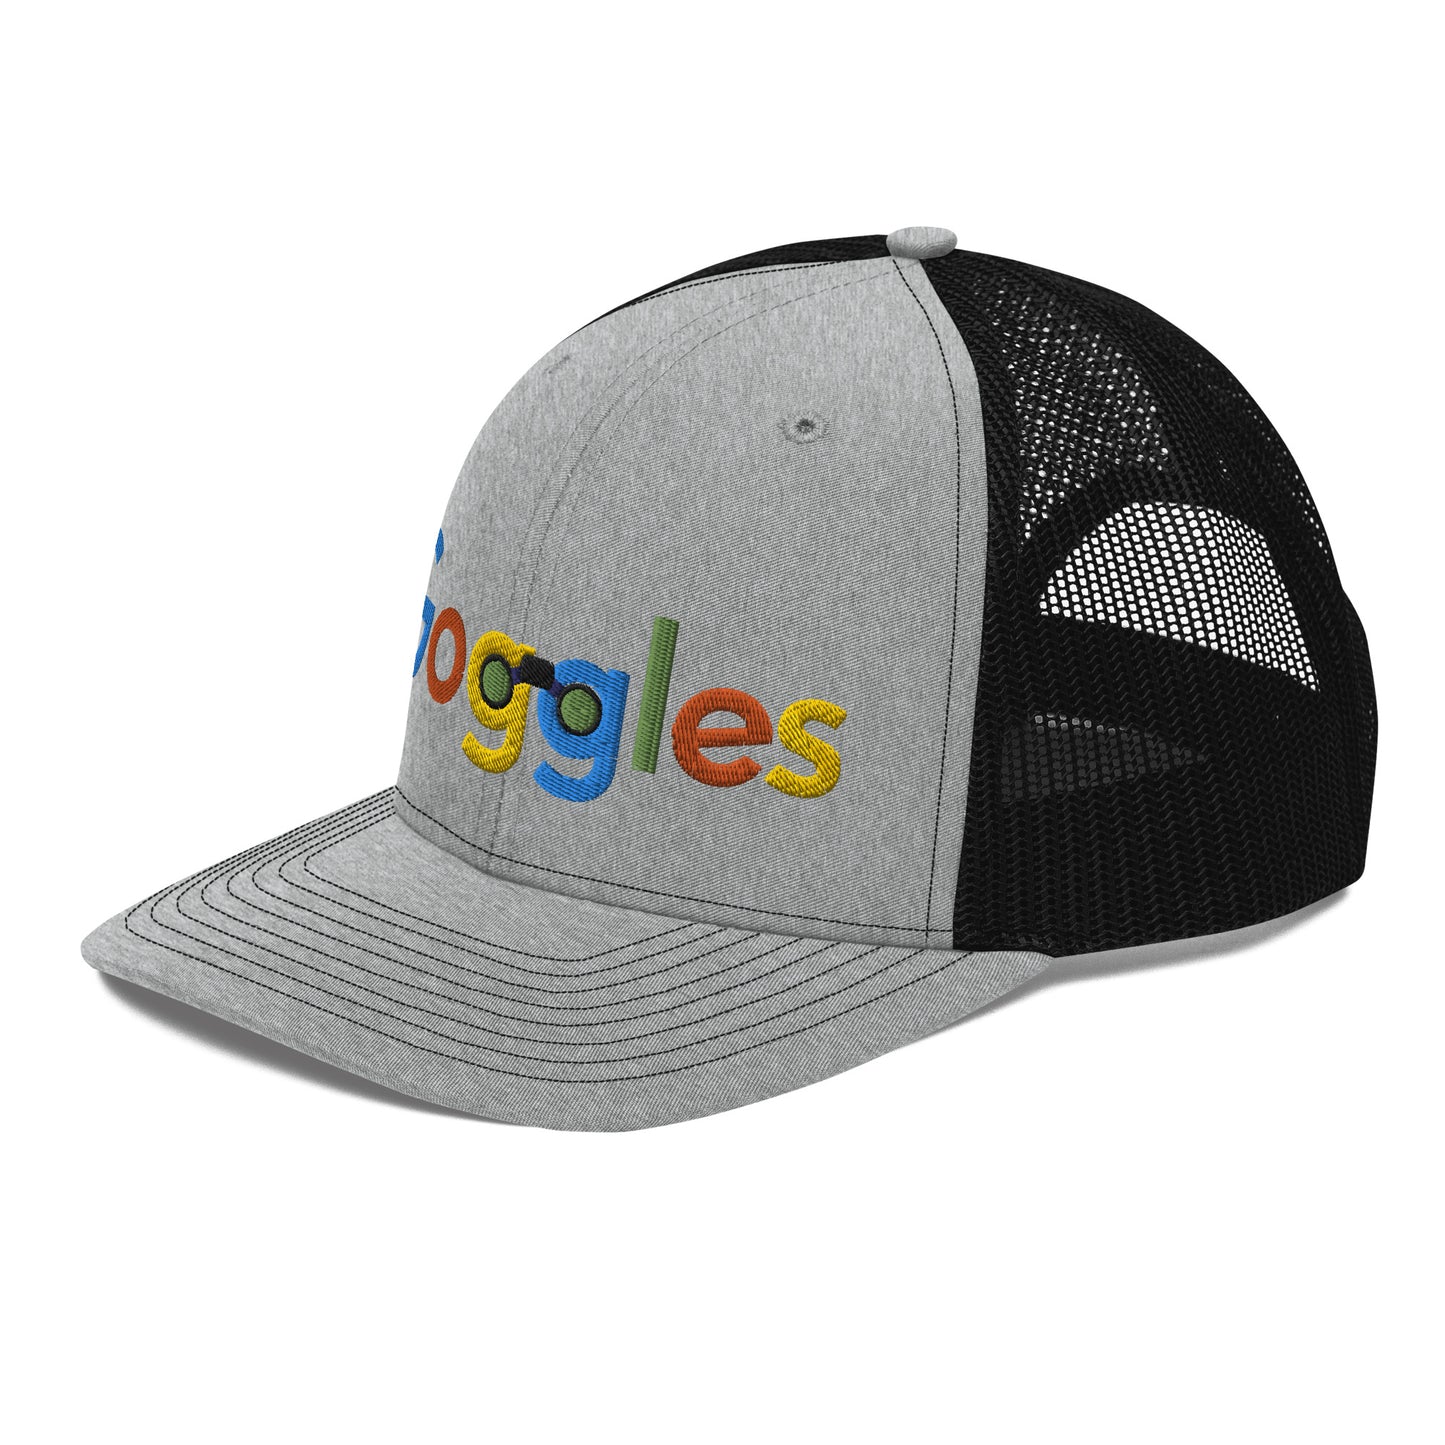 Goggles Trucker Hat